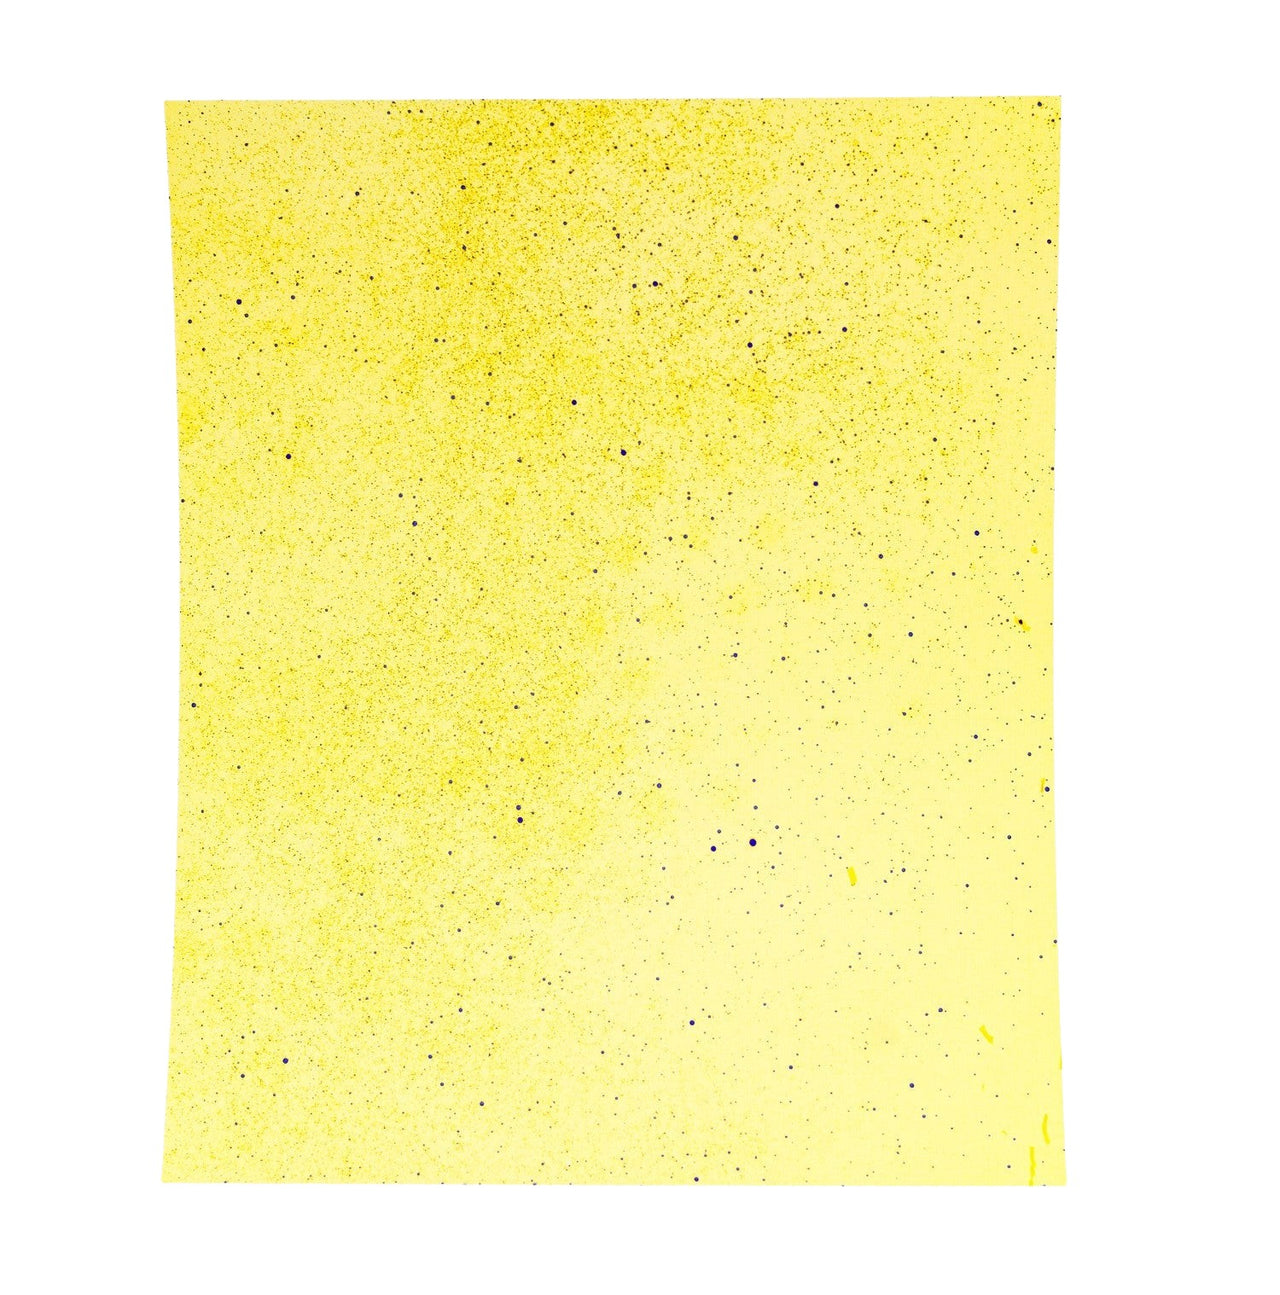 Spot-on 9.75 x 11.75 water sensitive paper